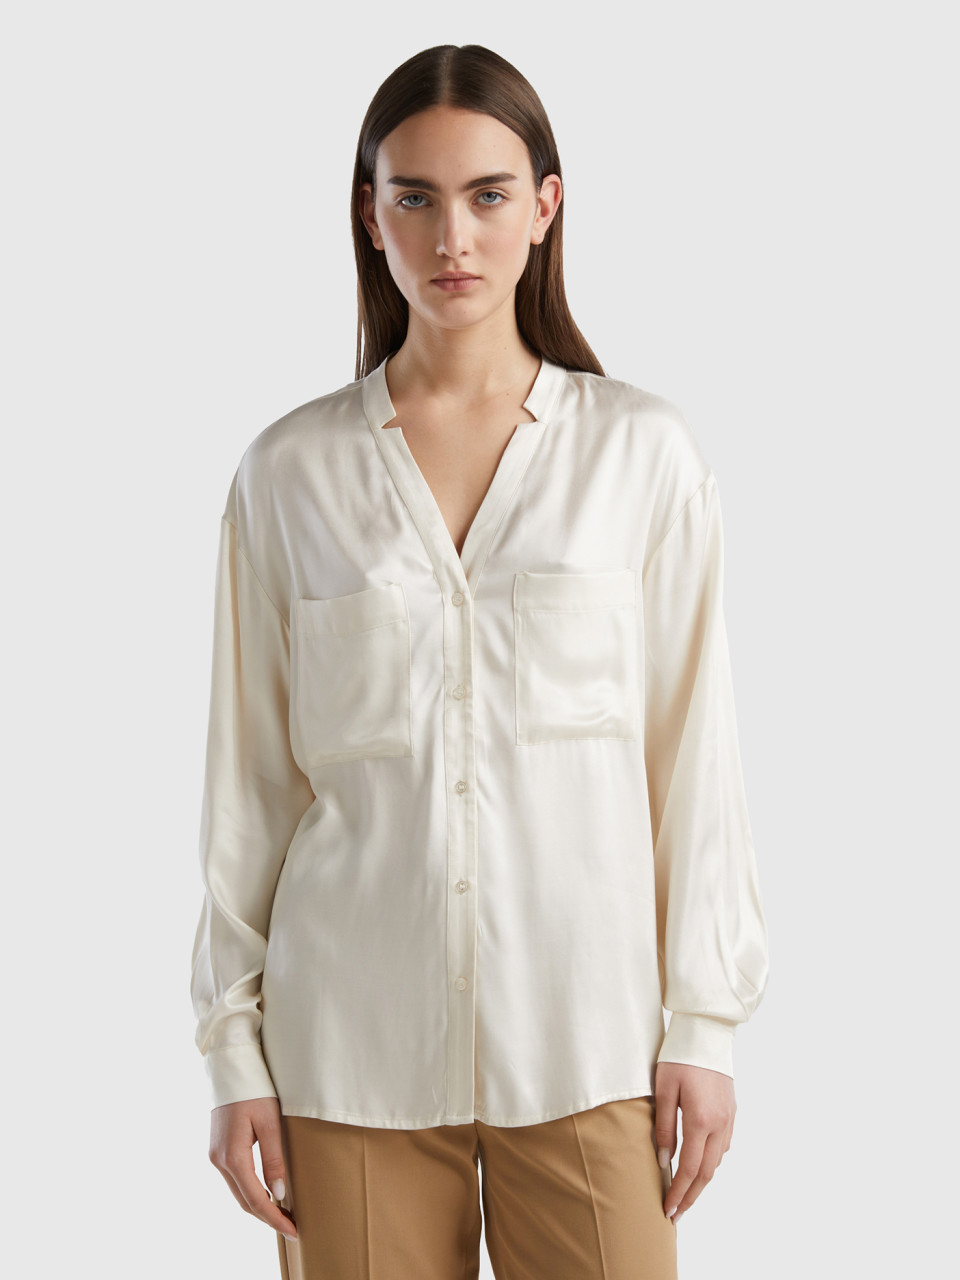 Benetton, Pure Viscose Shirt With Pockets, Creamy White, Women